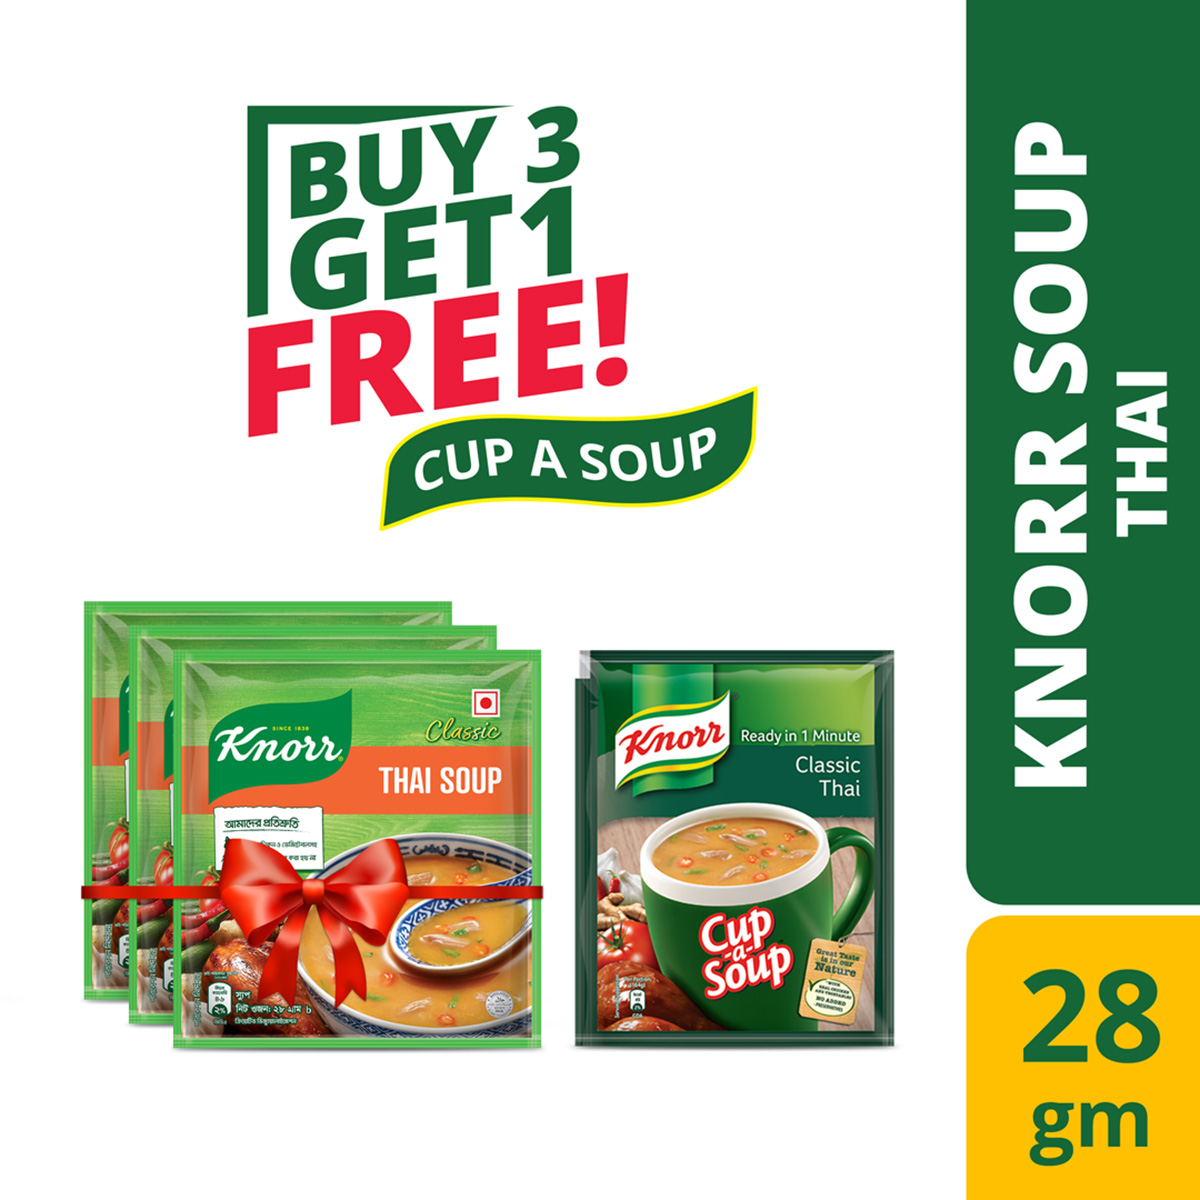 Knorr Soup Thai 28g (Buy 3 Get 1 Cup a Soup)